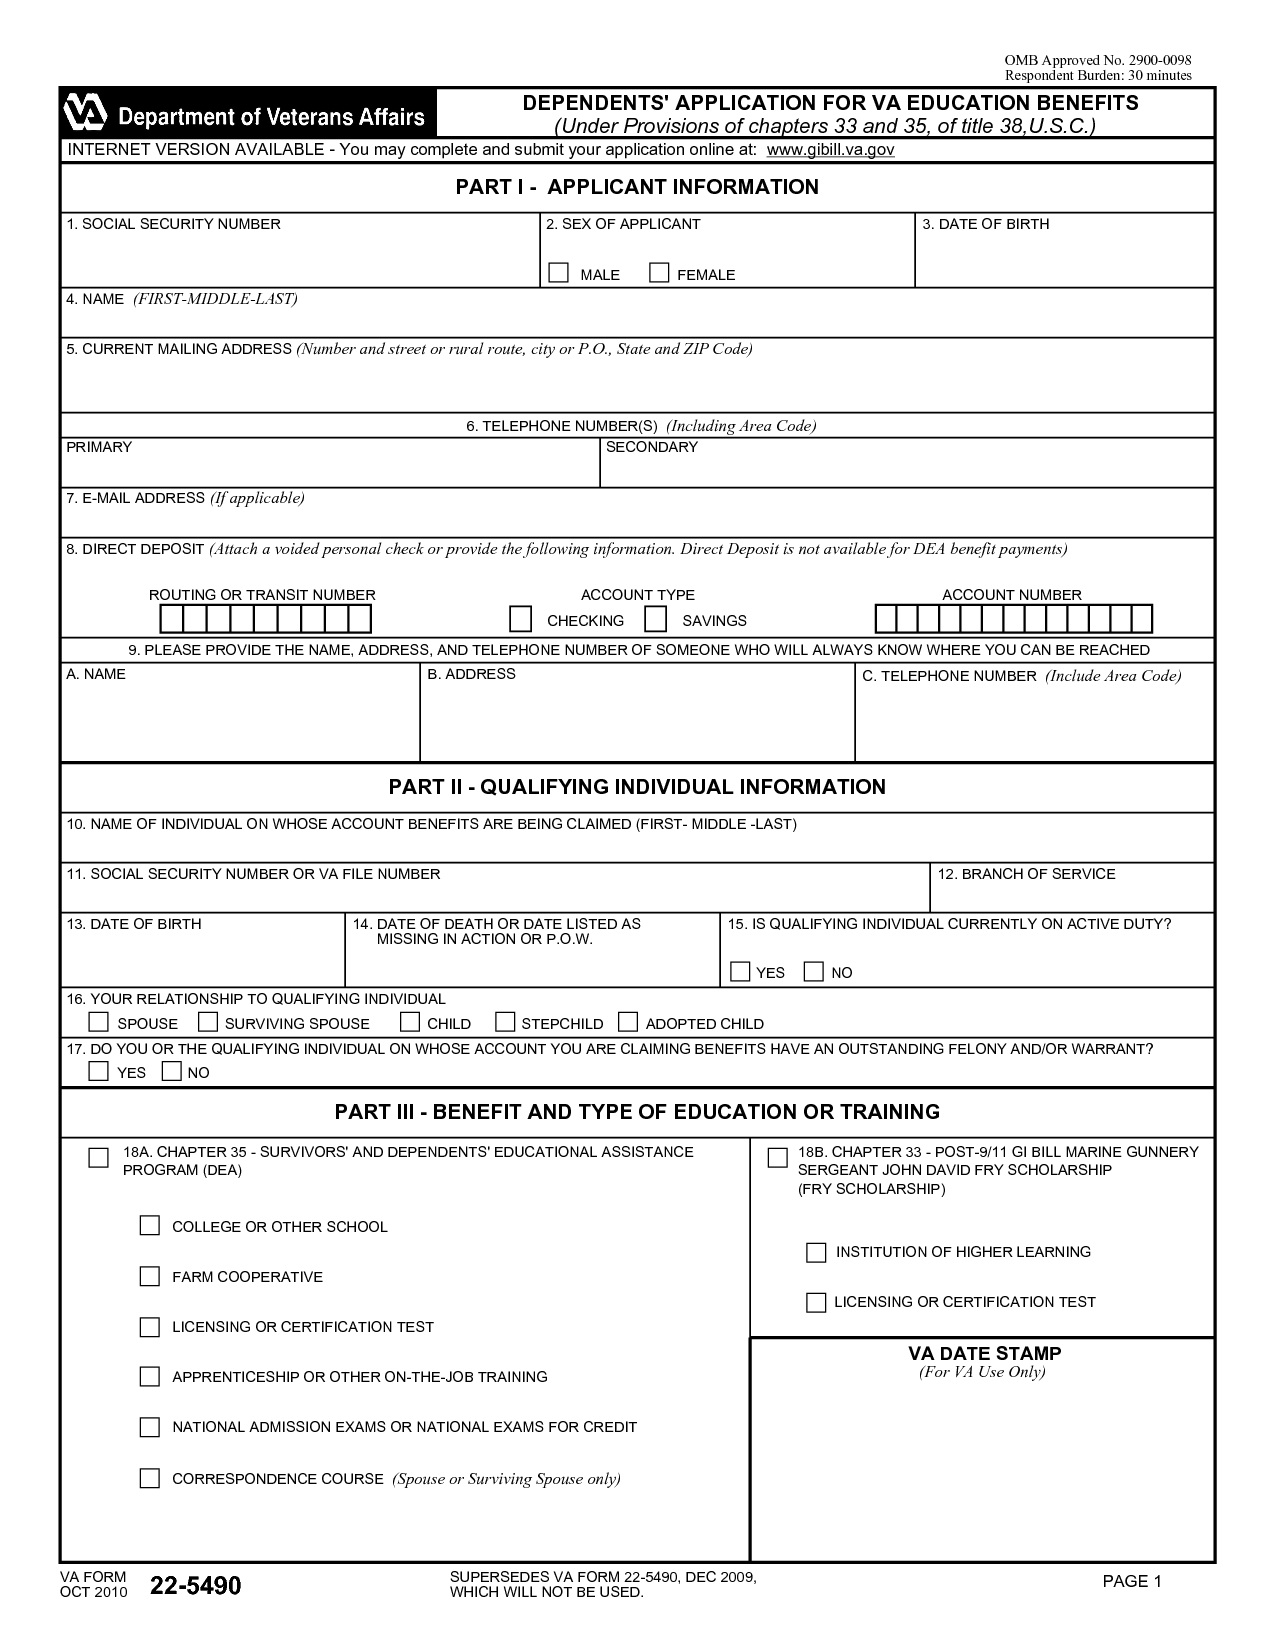 Certificate Fake Marriage Printable 4 – Elsik Blue Cetane - Fake Marriage Certificate Printable Free